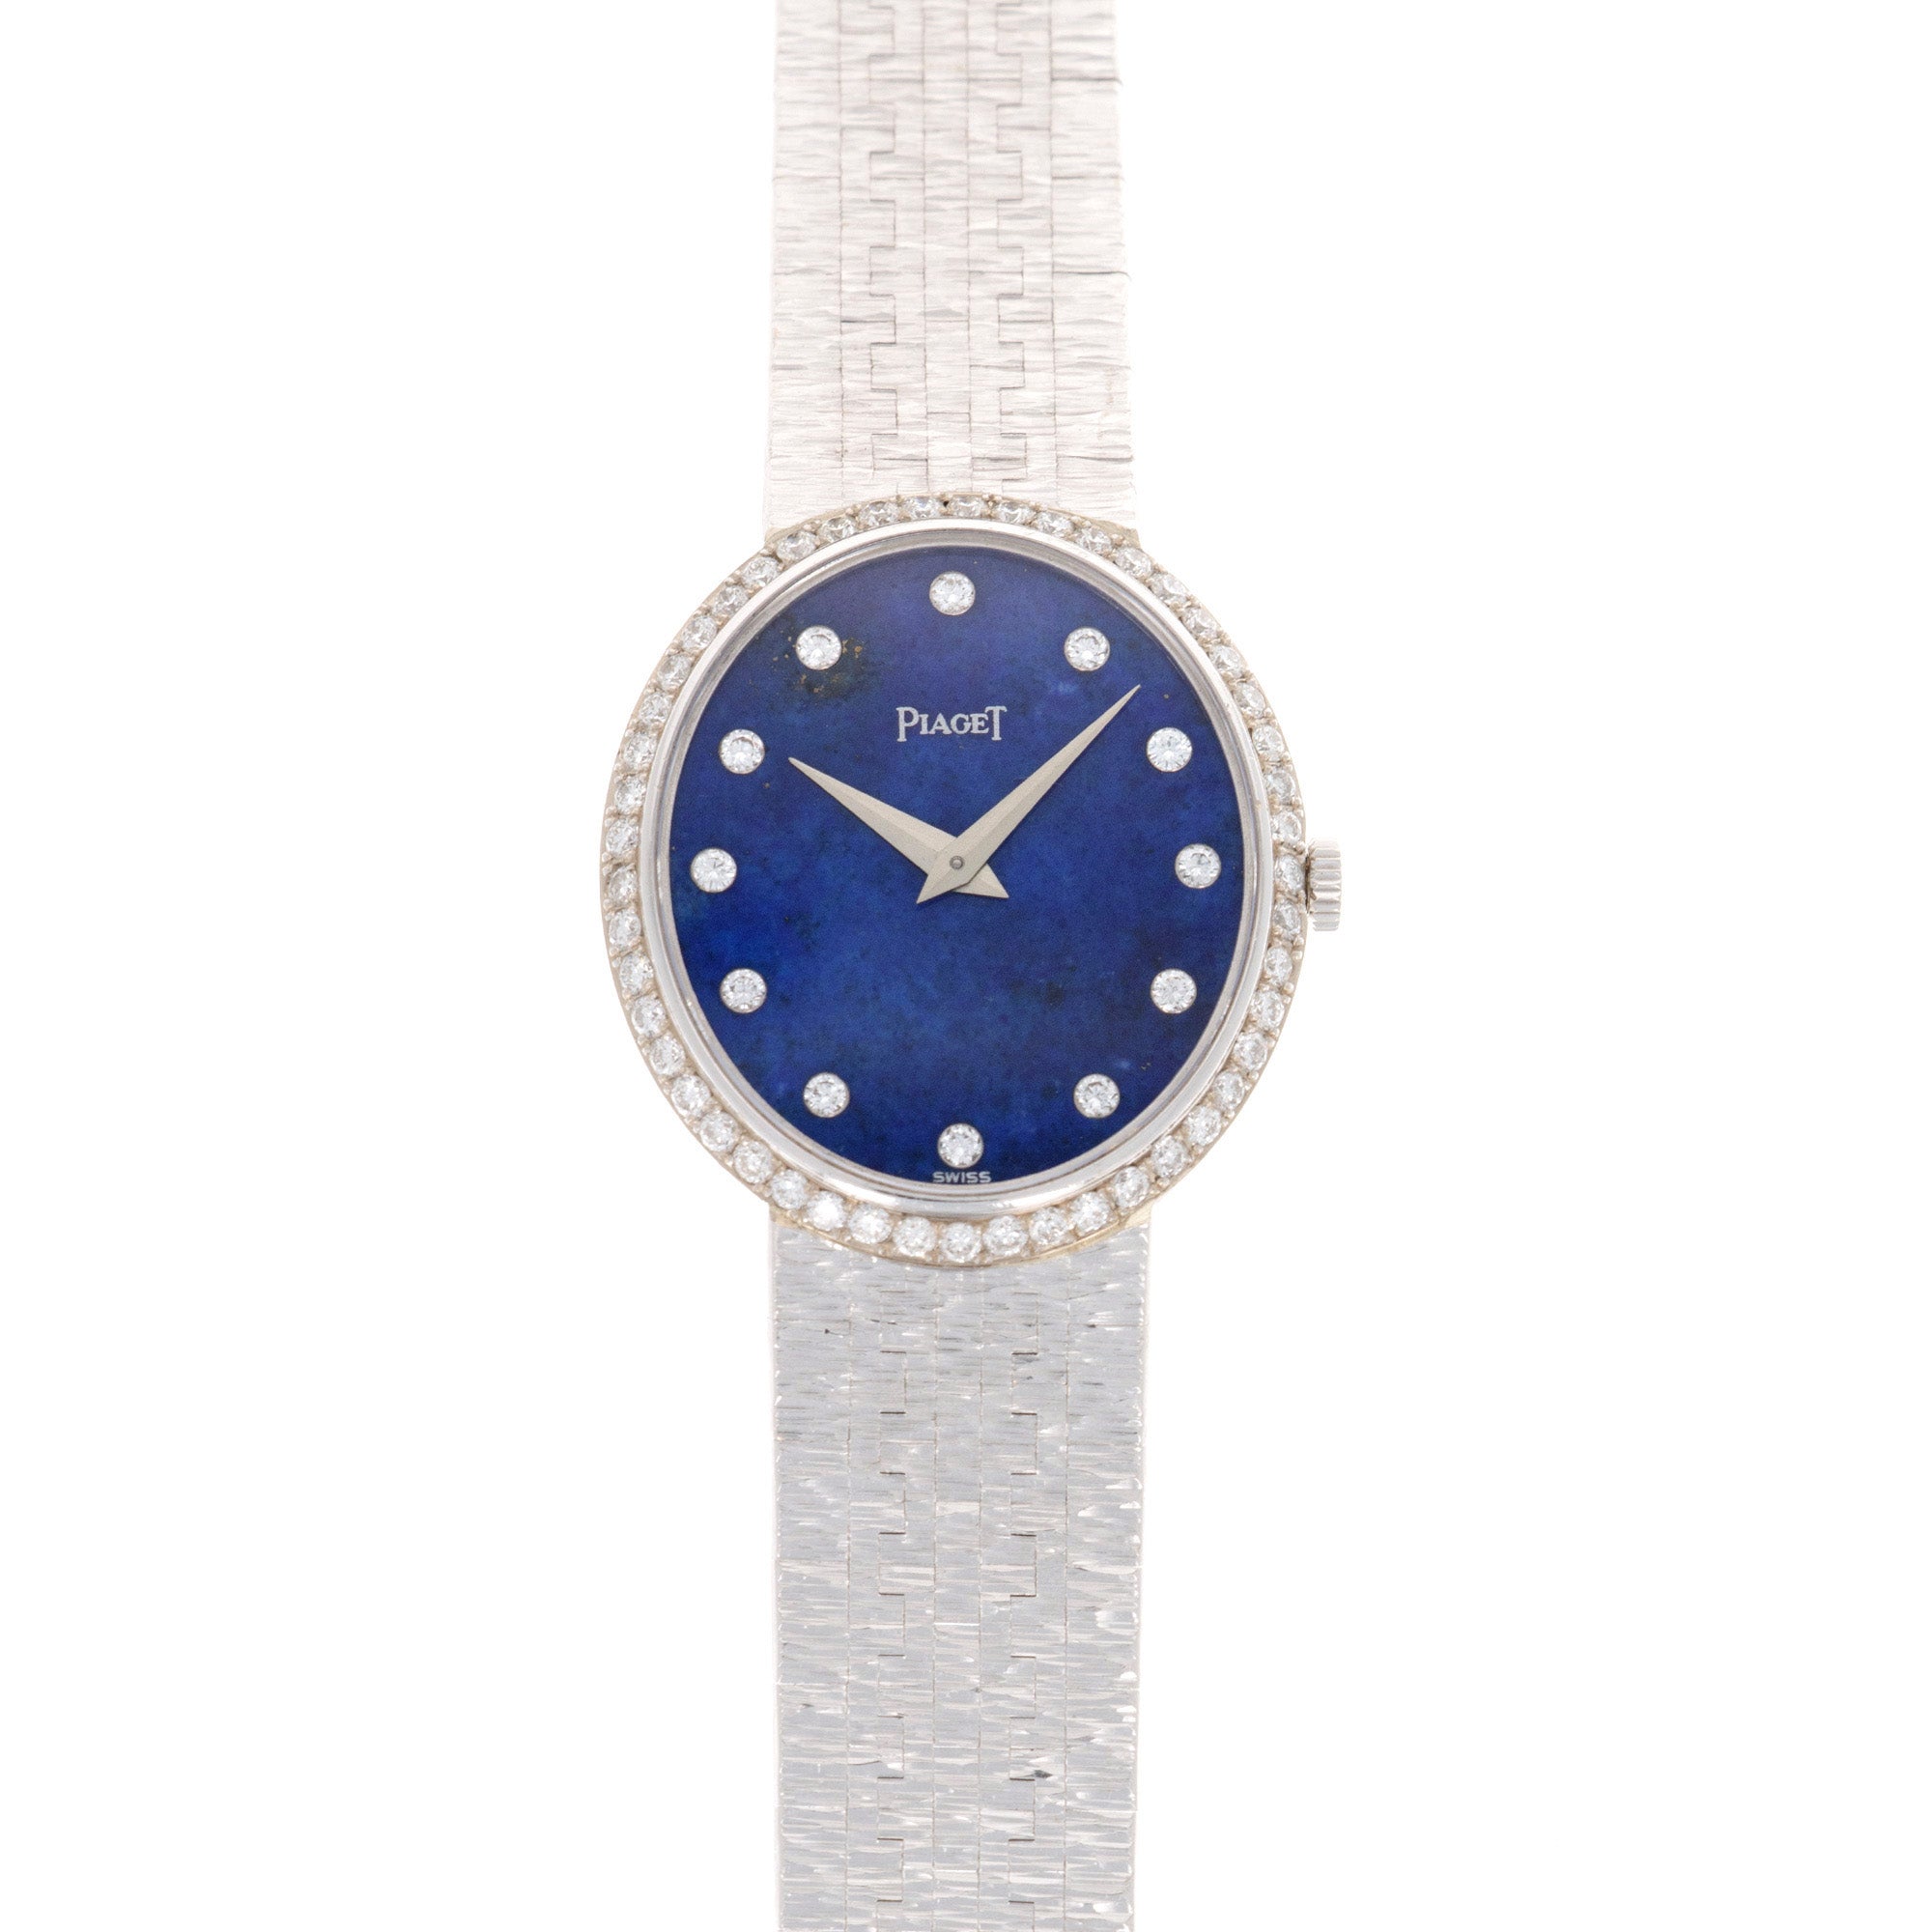 Piaget - Piaget White Gold Lapis Diamond Bracelet Watch - The Keystone Watches